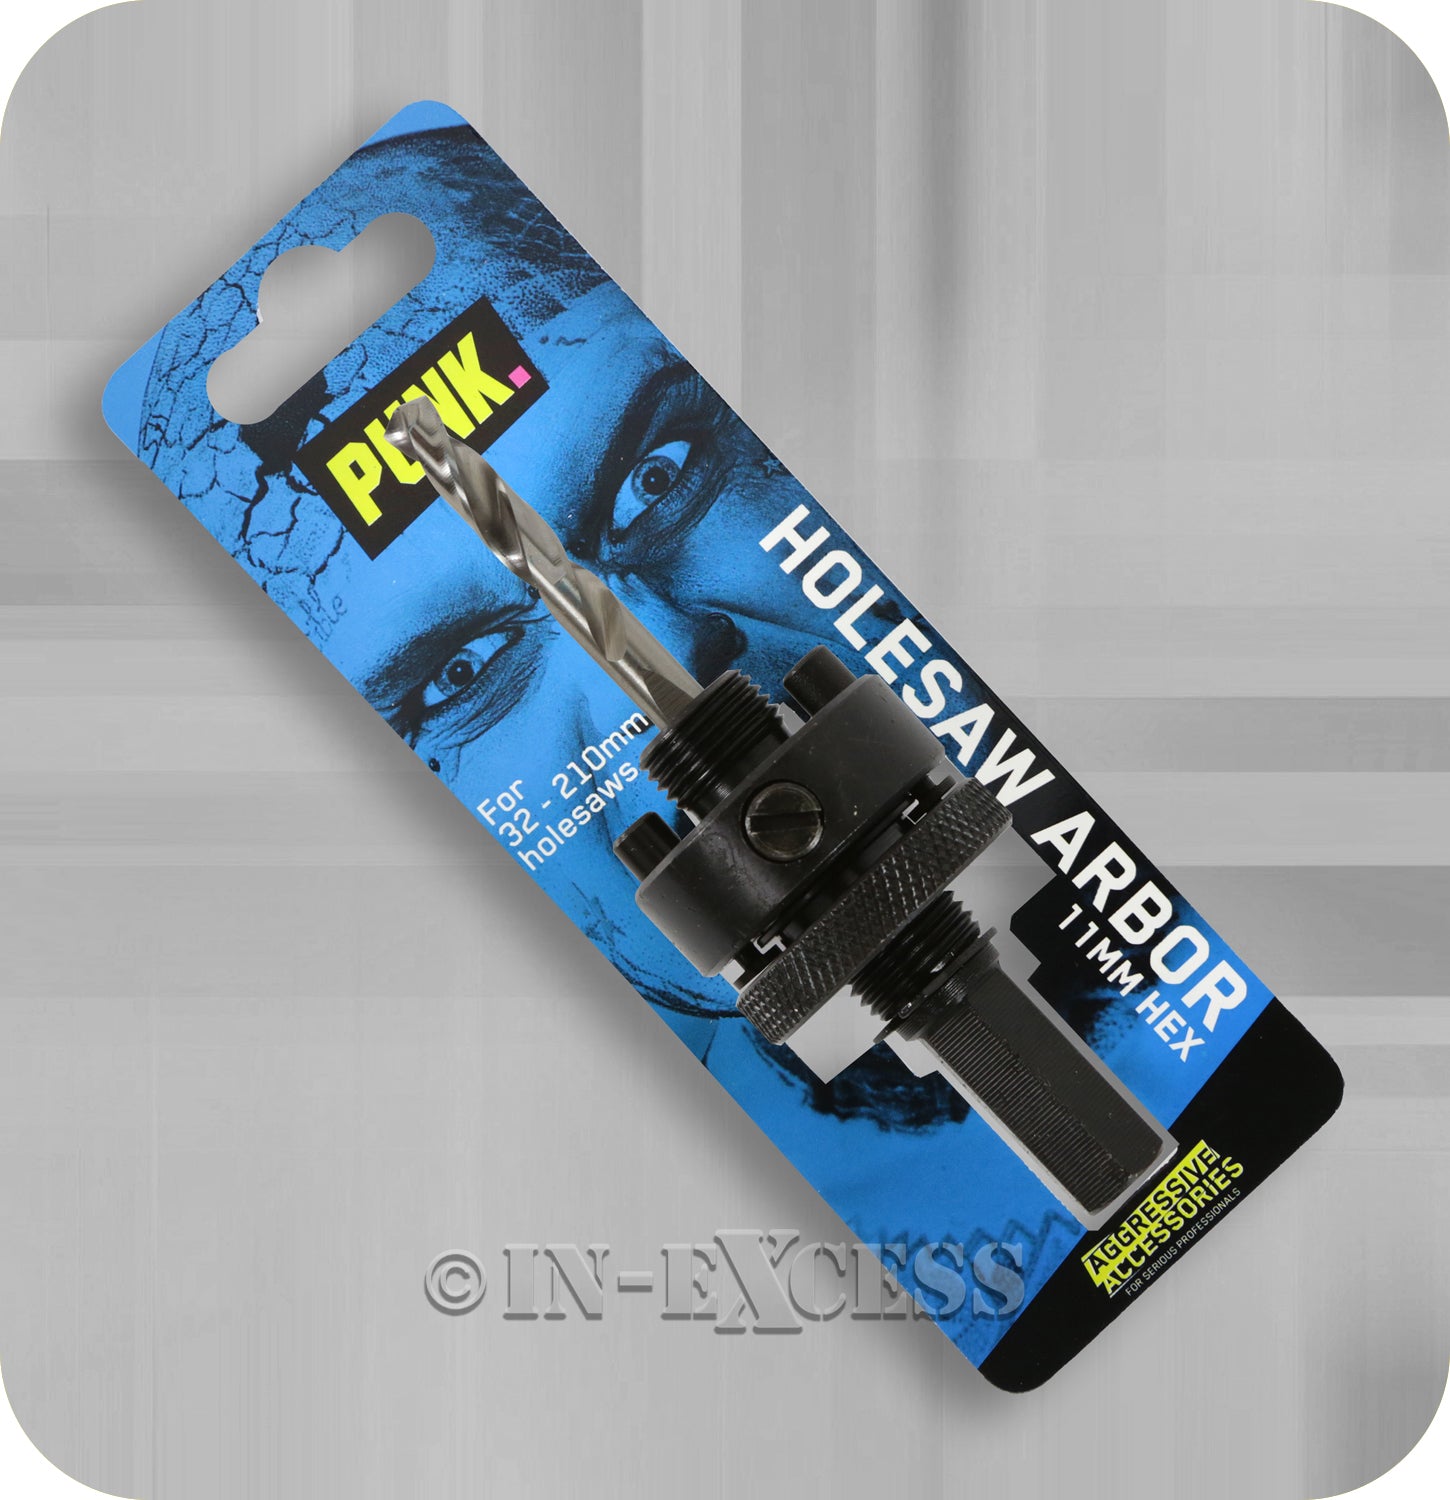 Punk Power Tool Accessories Bi-Metal Cobalt Holesaw Bit - 38mm (1 1/2")